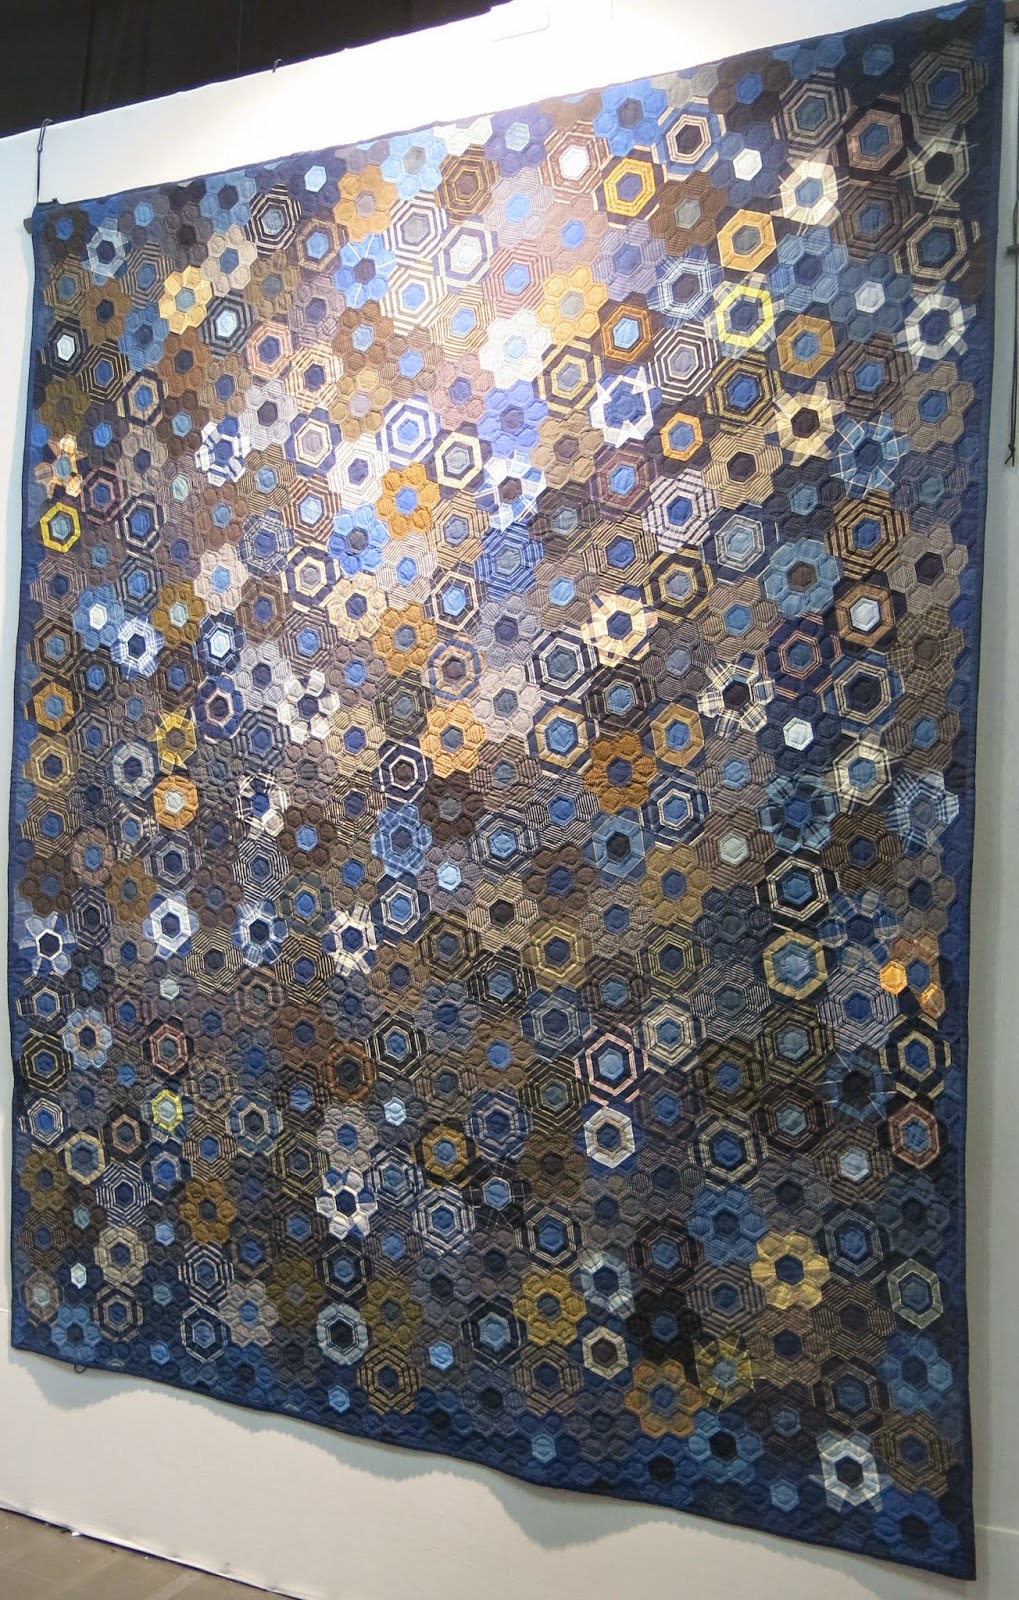 Quilt exhibition in Nantes - Tomie Nagano's indigo quilts